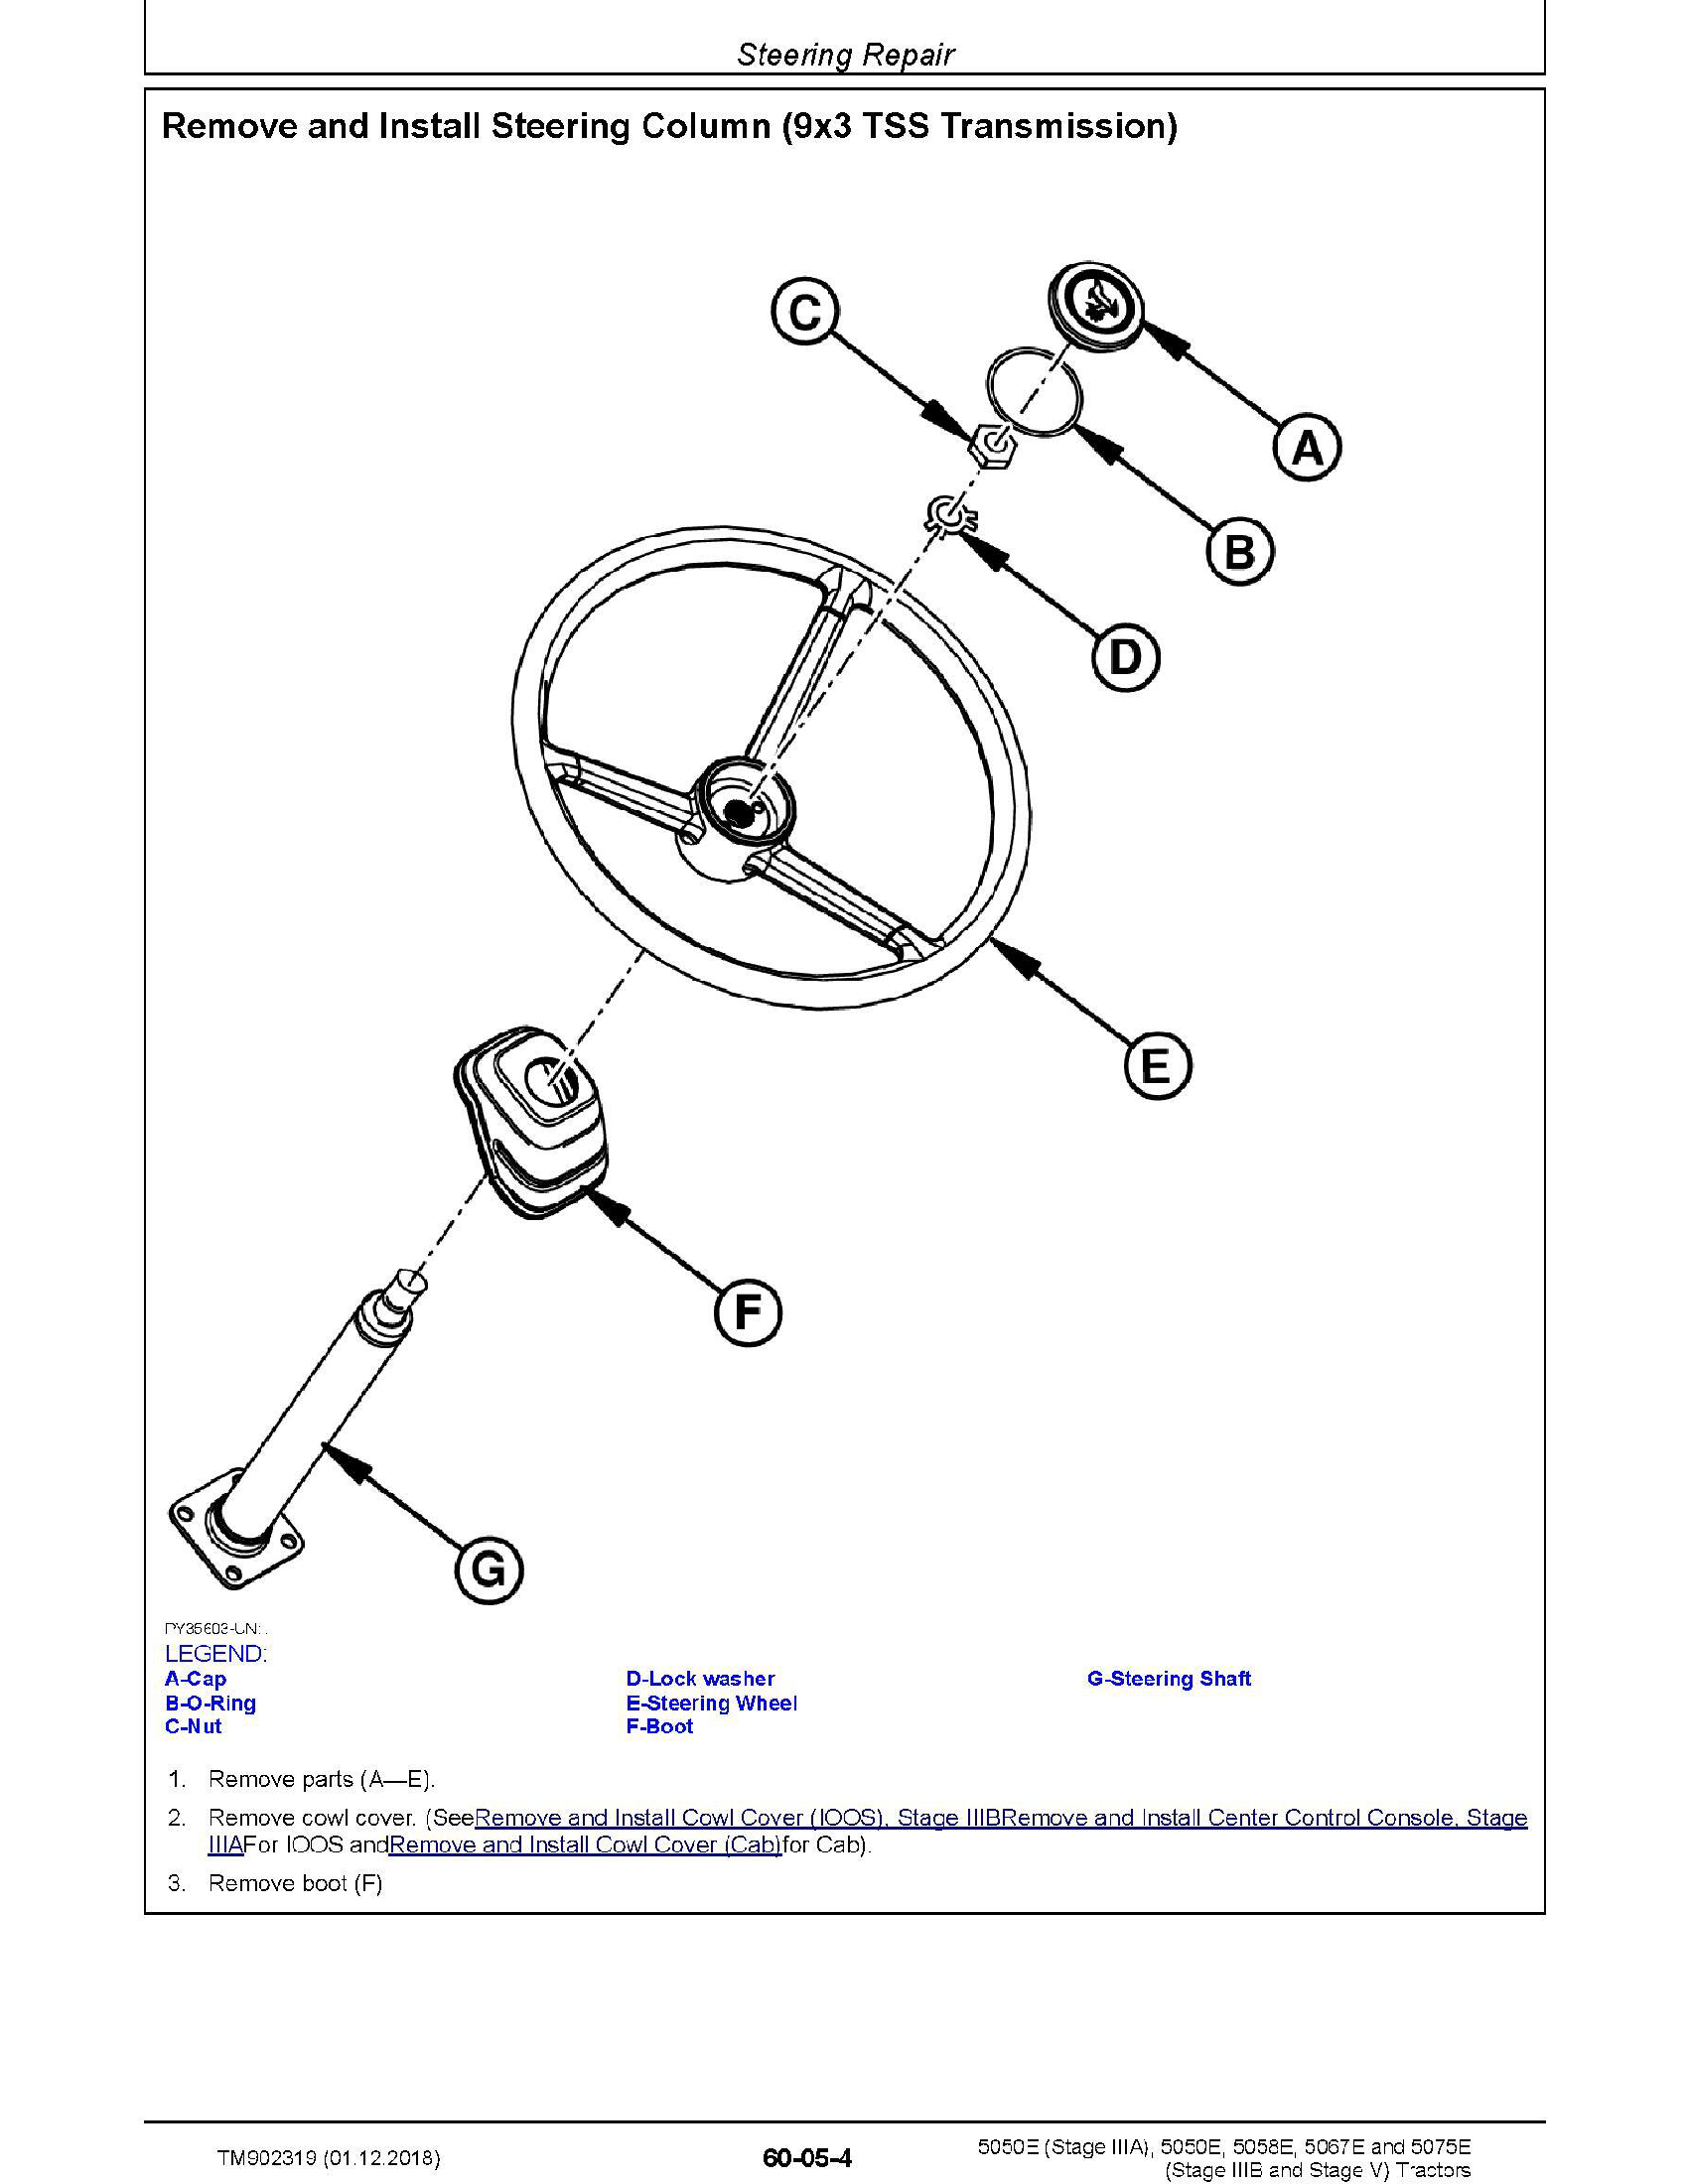 John Deere 335D manual pdf